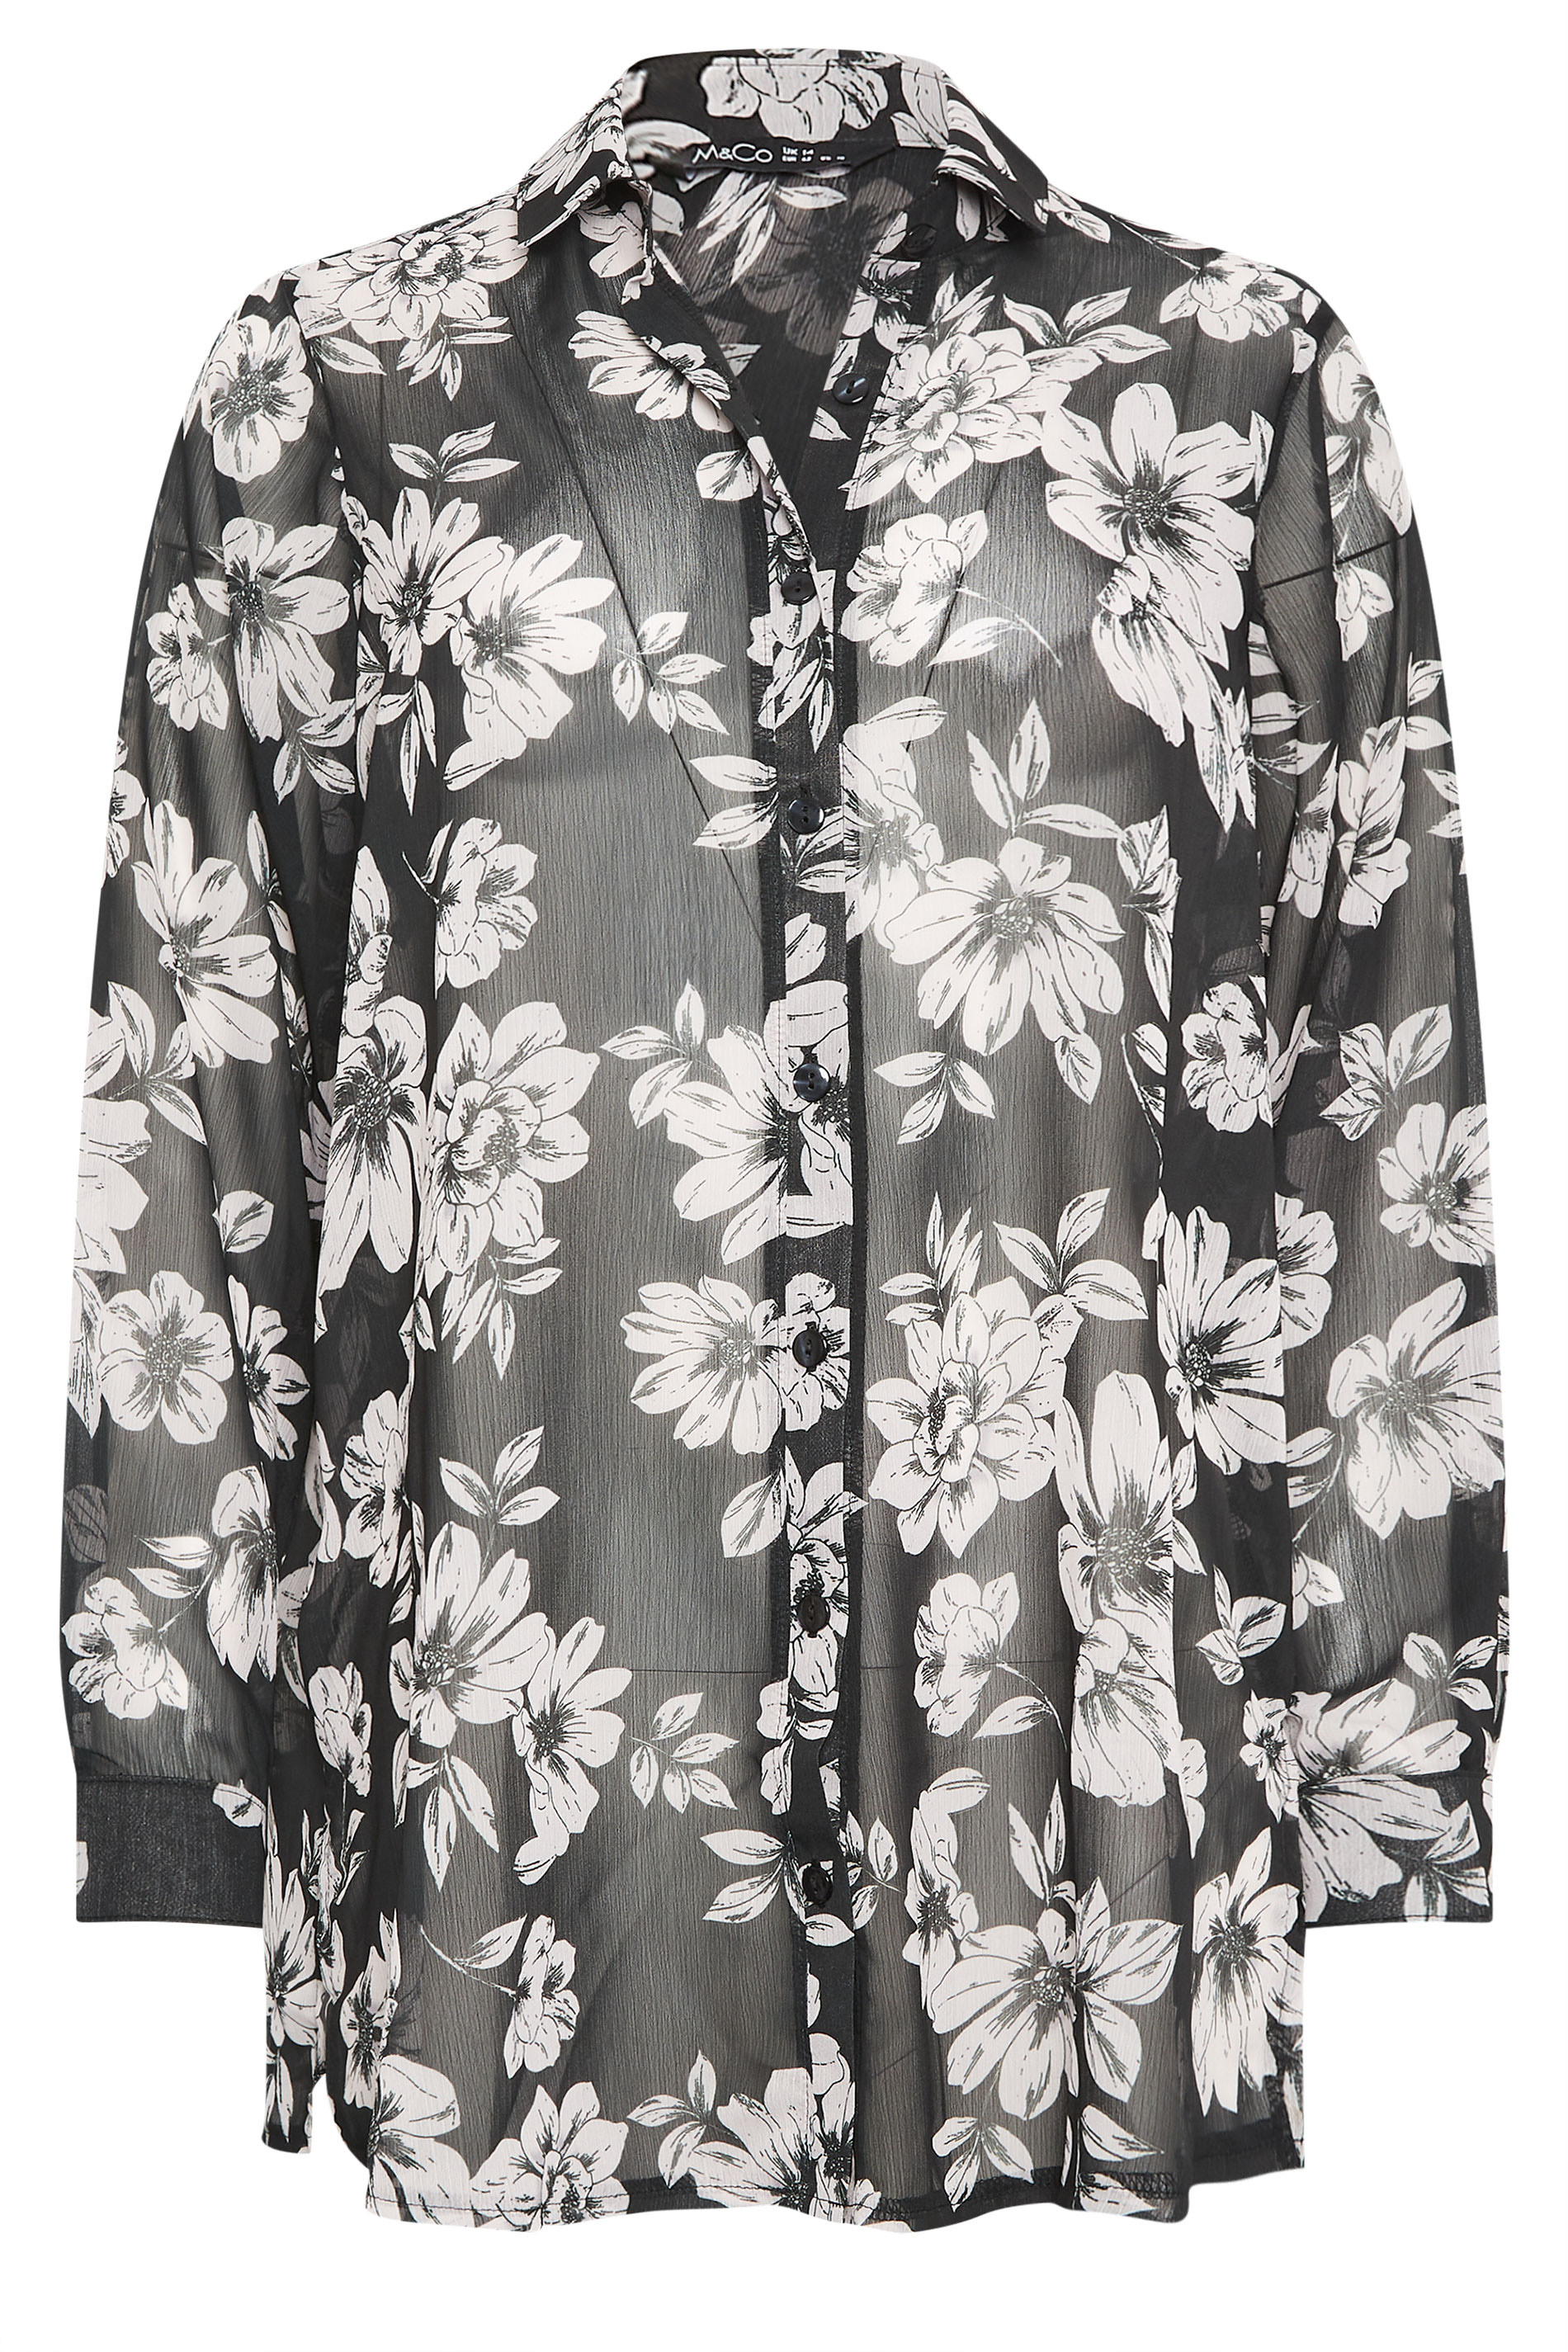 M&Co Black & White Floral Print Longline Shirt | M&Co